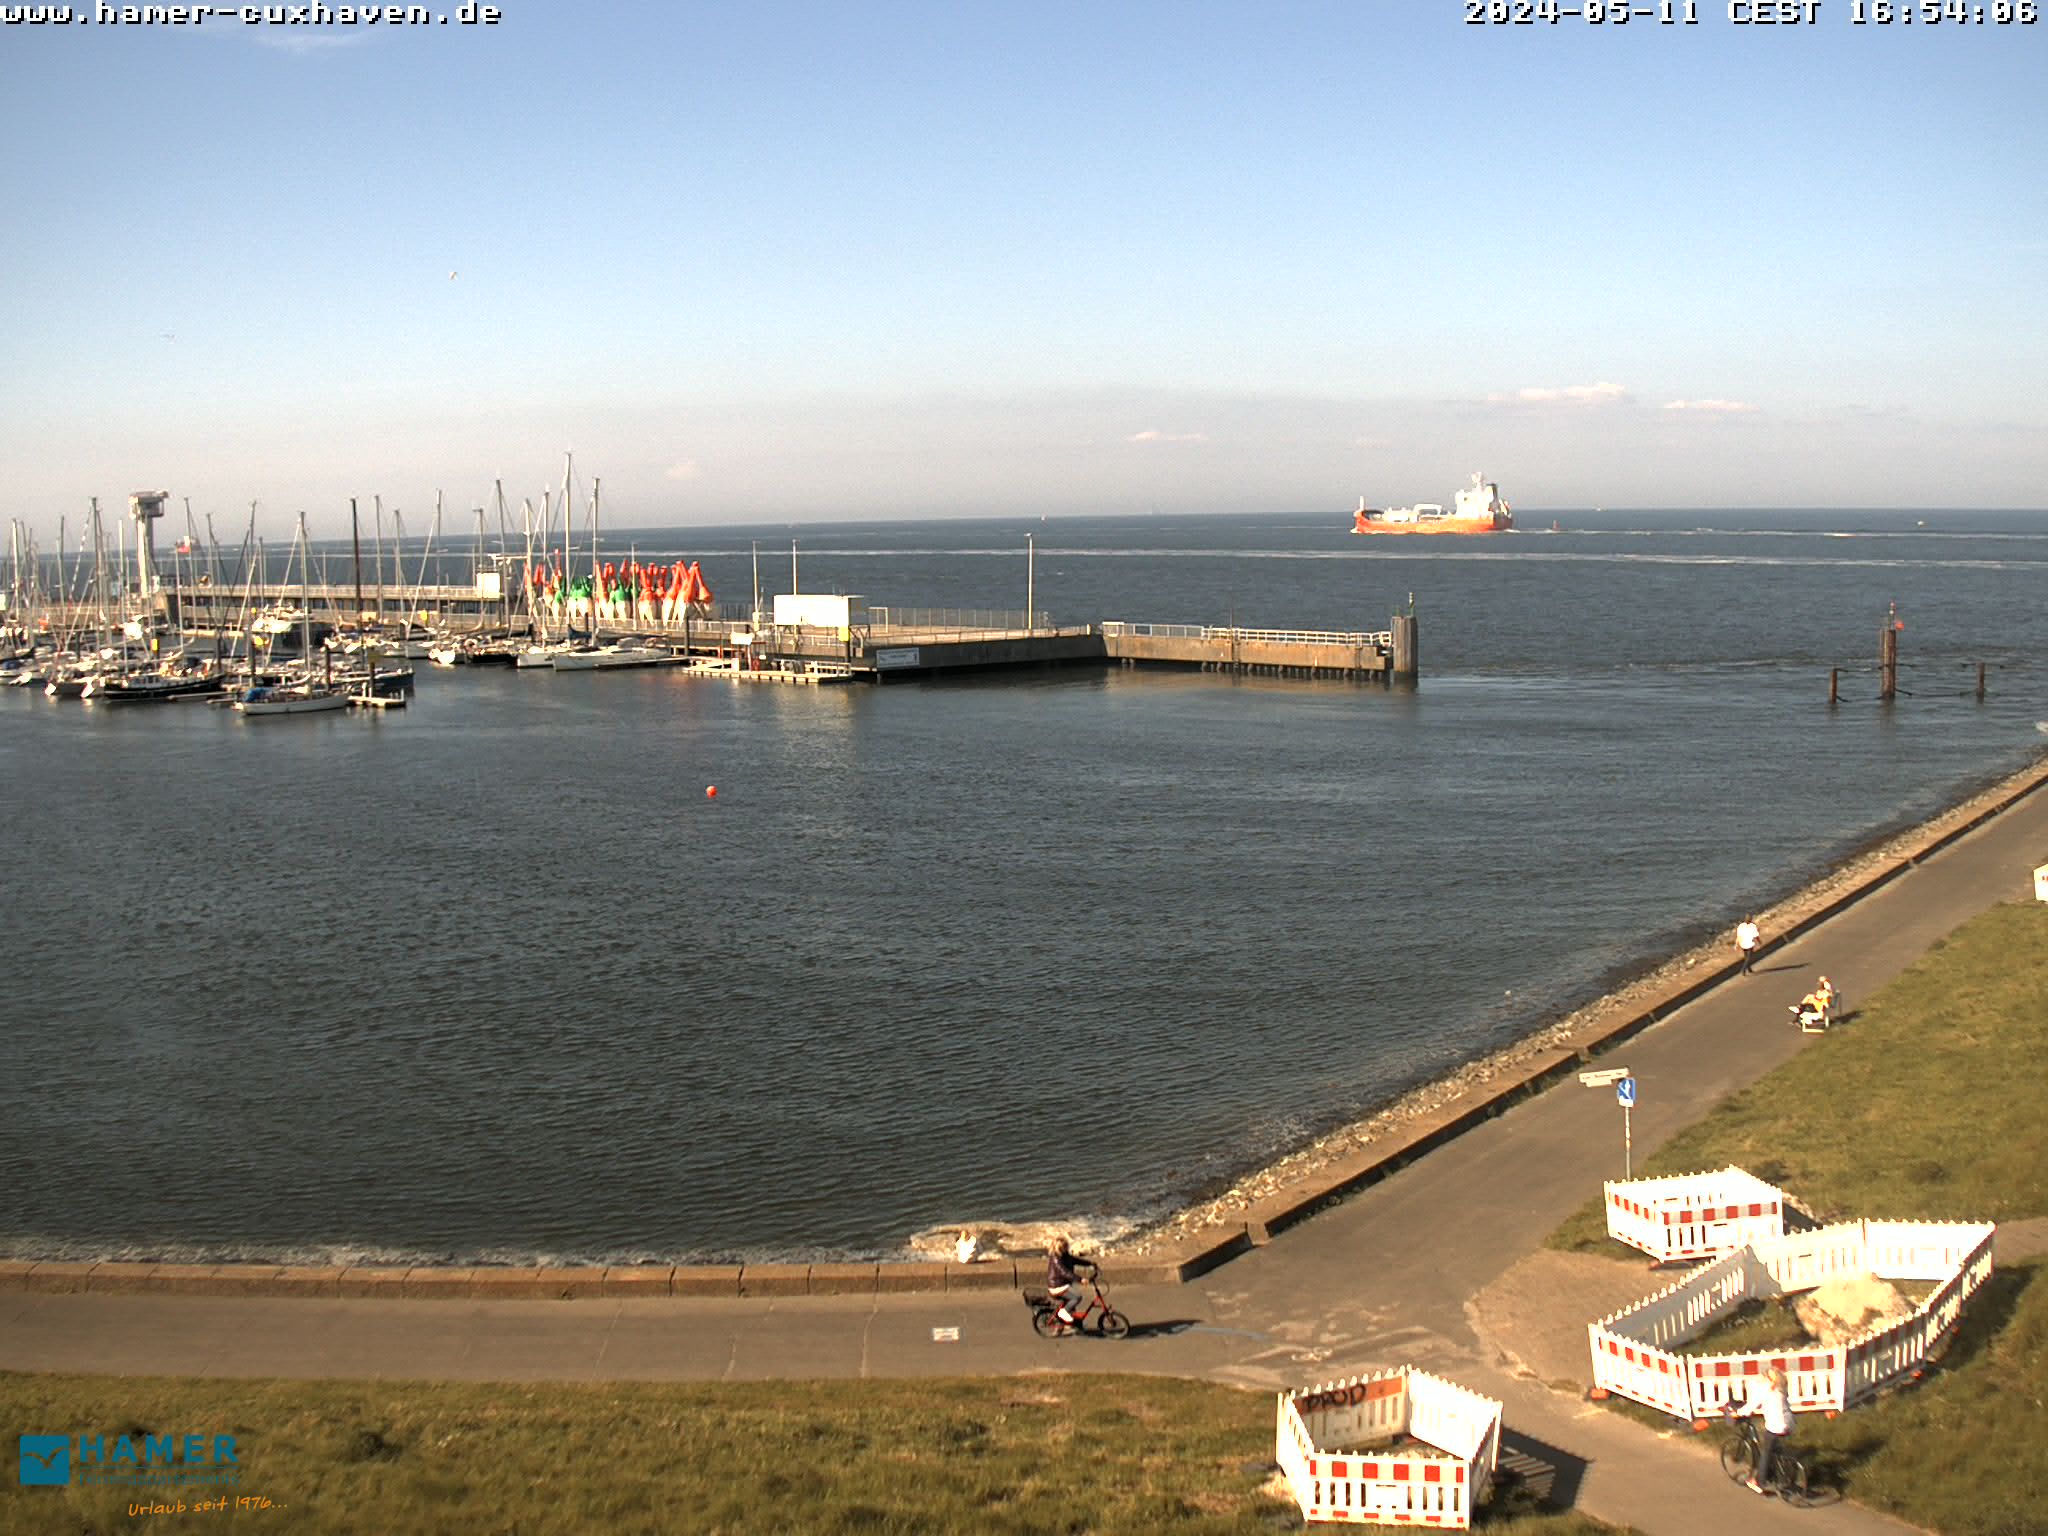 Cuxhaven Mer. 16:55